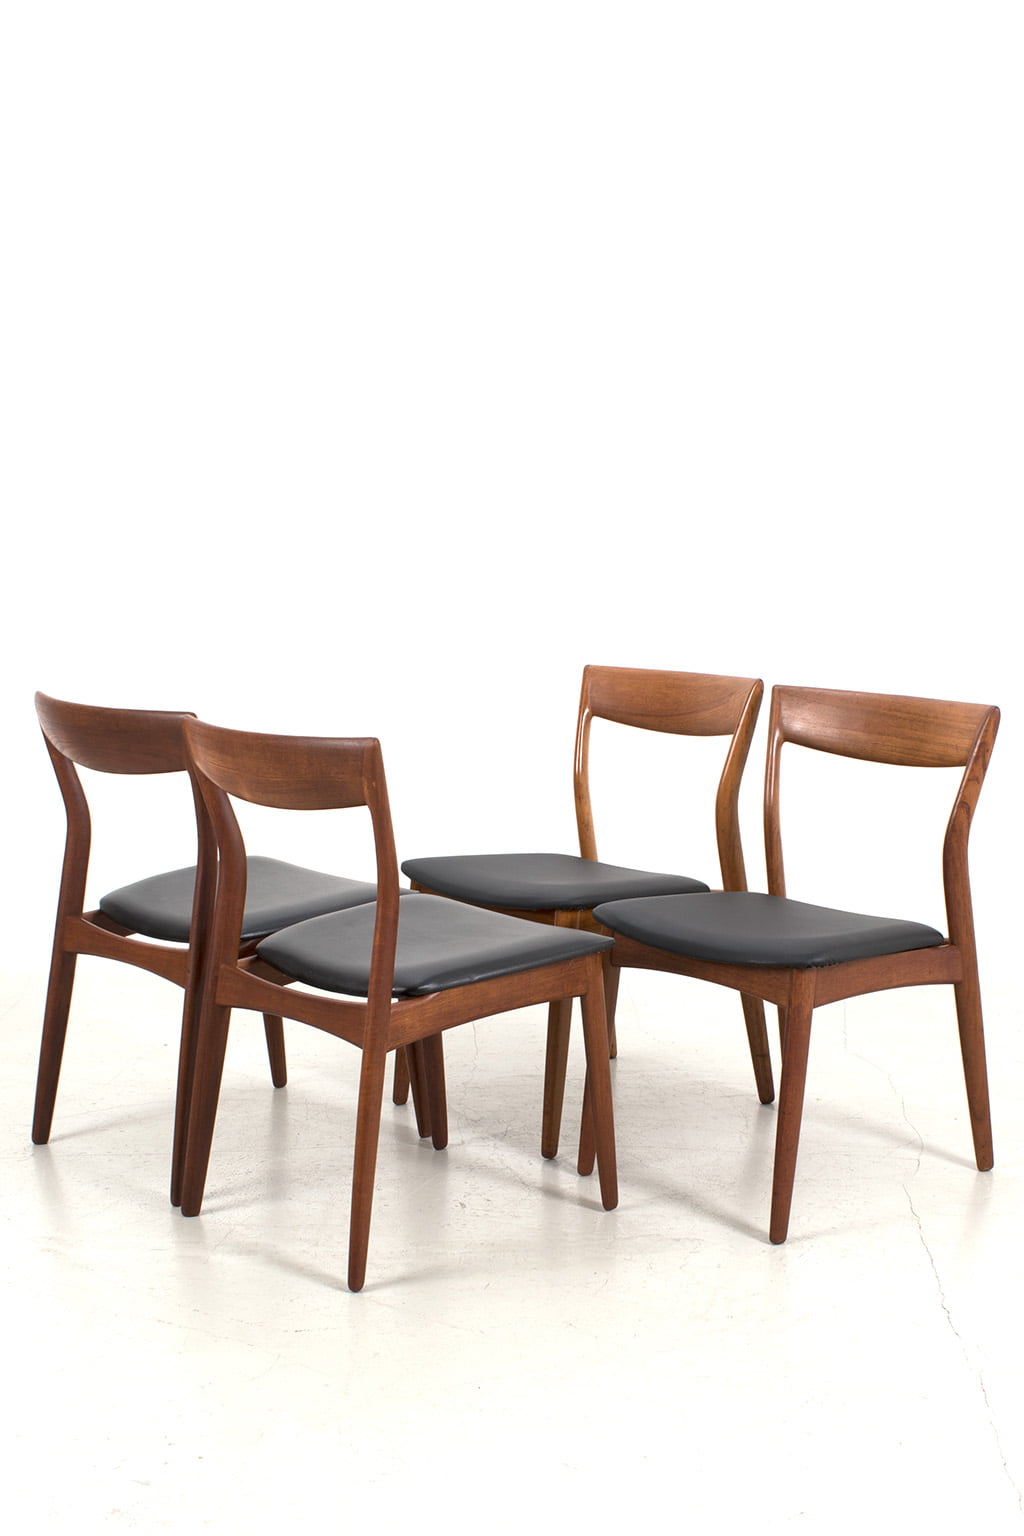 Set/4 stoelen met zwarte skai